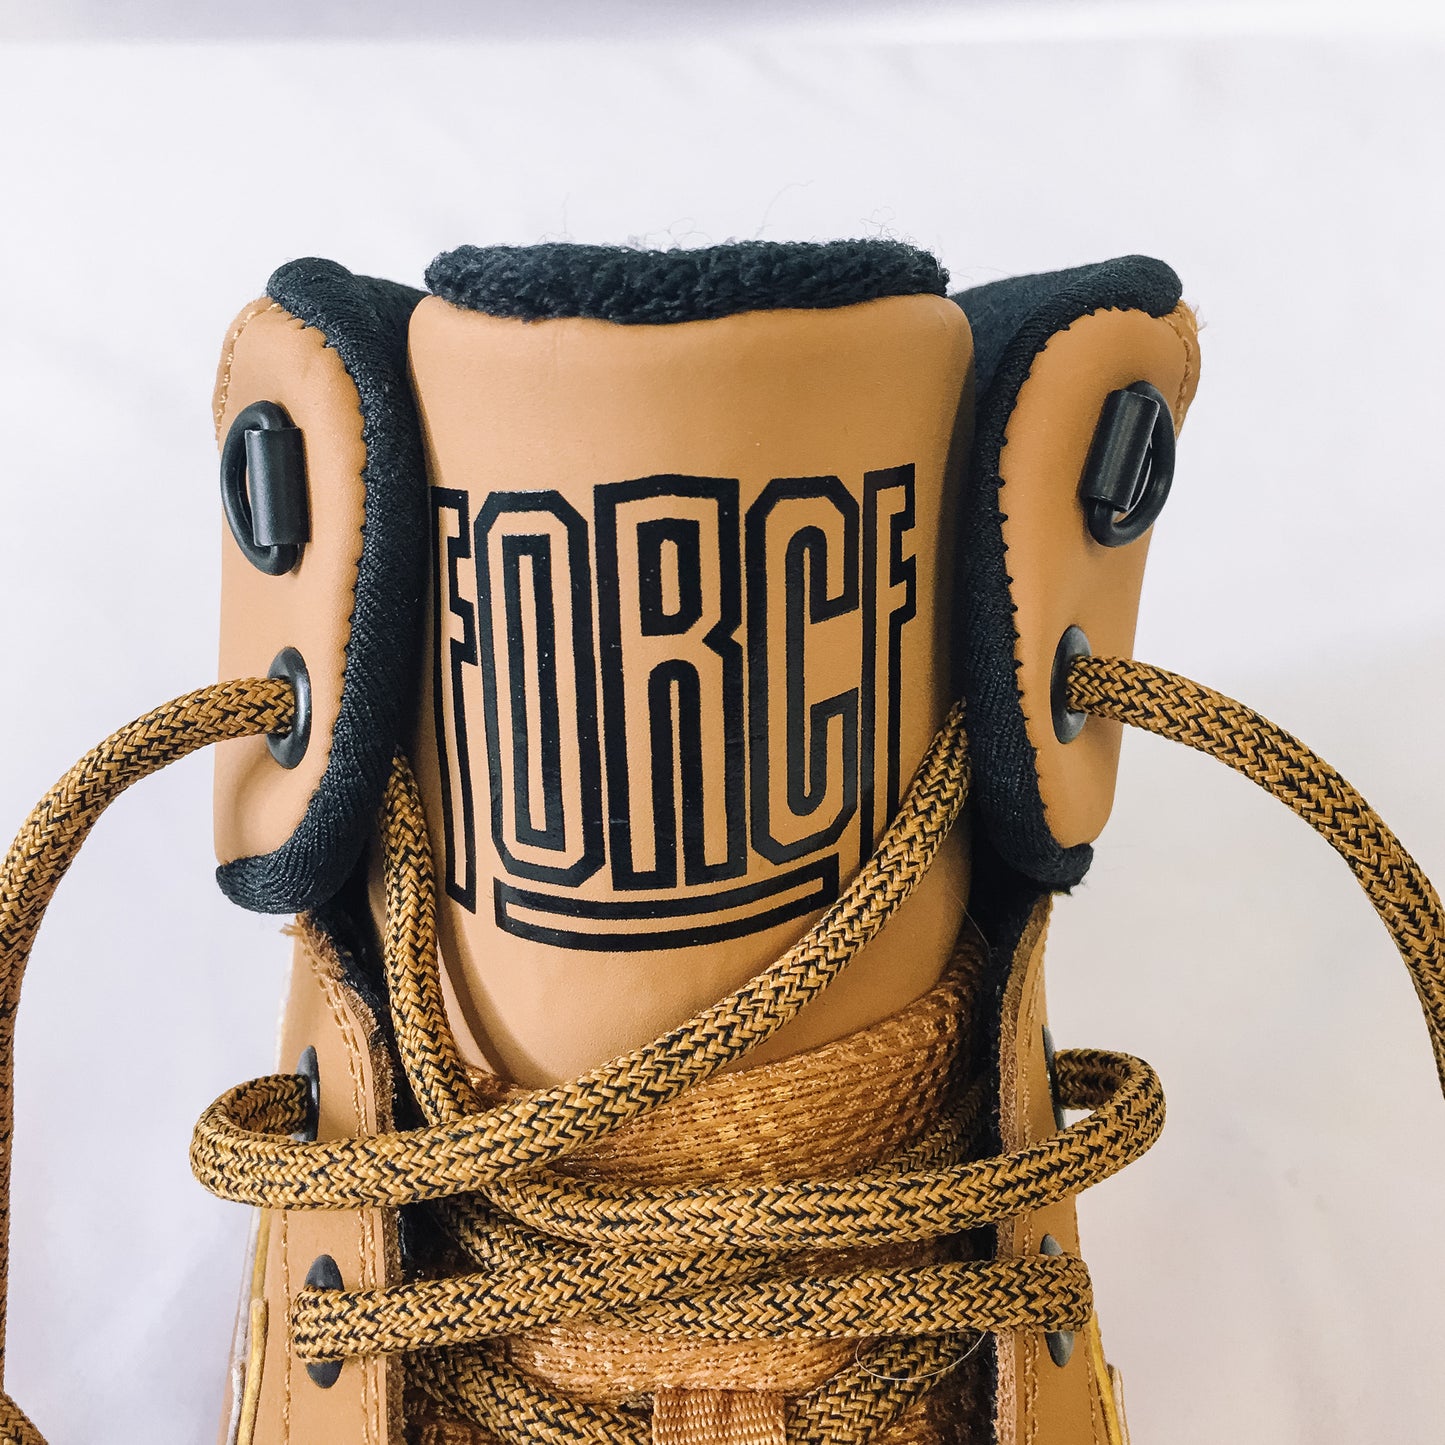 Nike Son of Force Mid Winter "Wheat" Sneakers, Men's Sz. 7